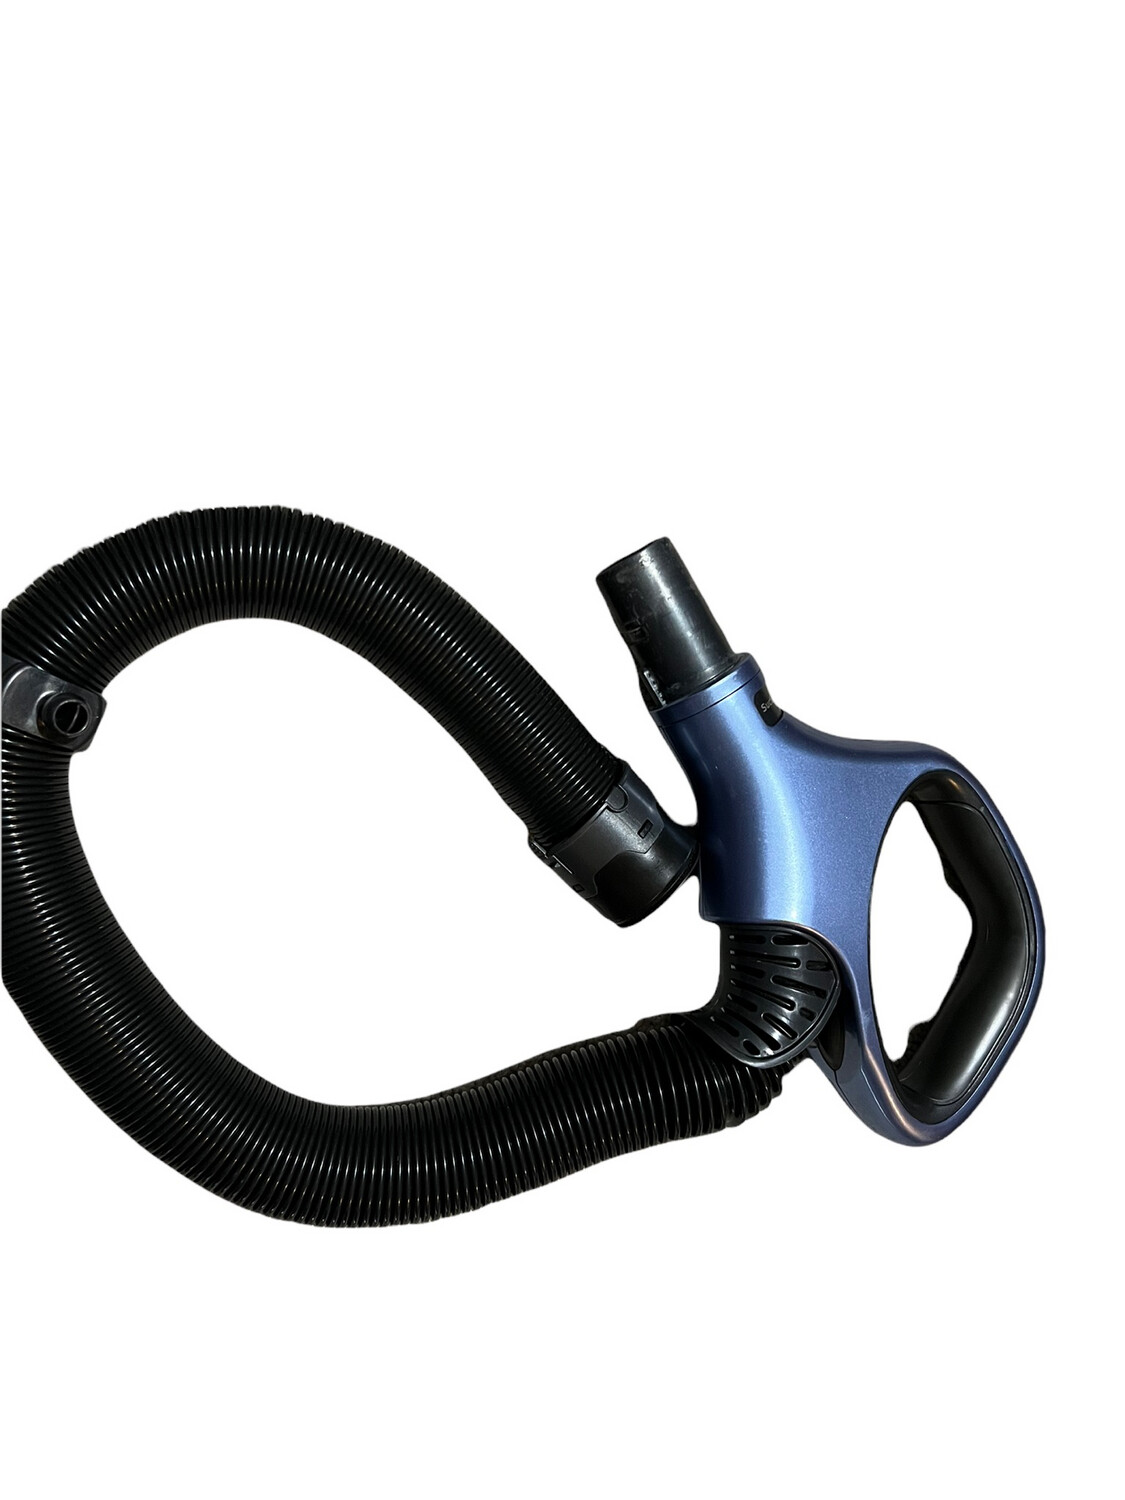 Shark rotator NV 642 handle hose assembly (preowned)